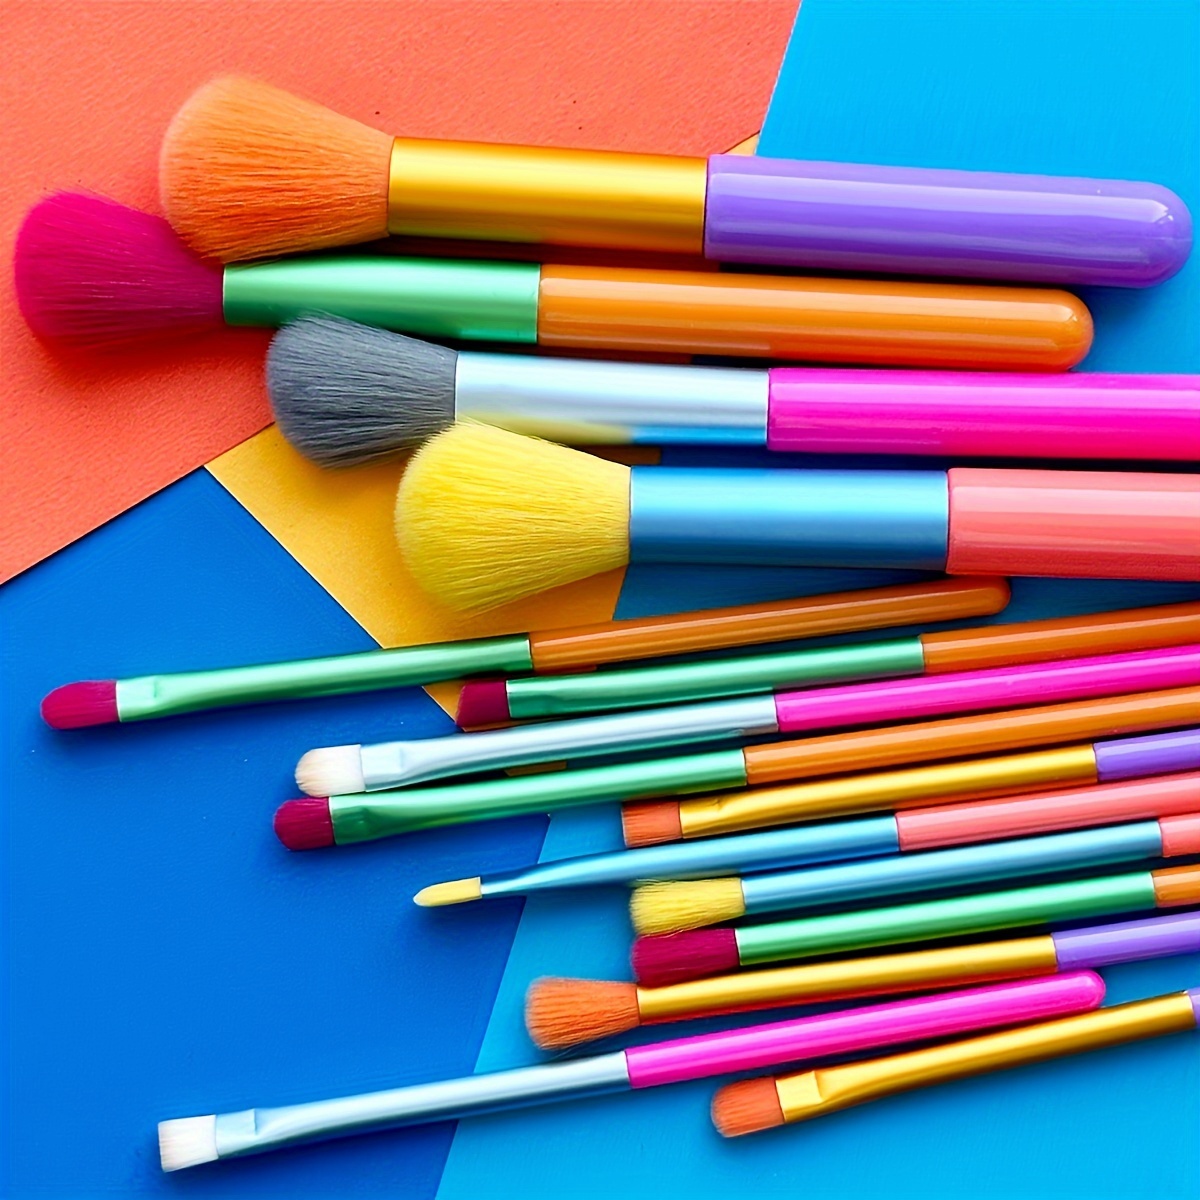 

15pcs/set Colorful Makeup Brushes For Beginners Including Eyeshadow Brush, Highlighter Brush, Powder Brush, Multi-function Brush, Rainbow-colored, Soft Fluffy Bristles